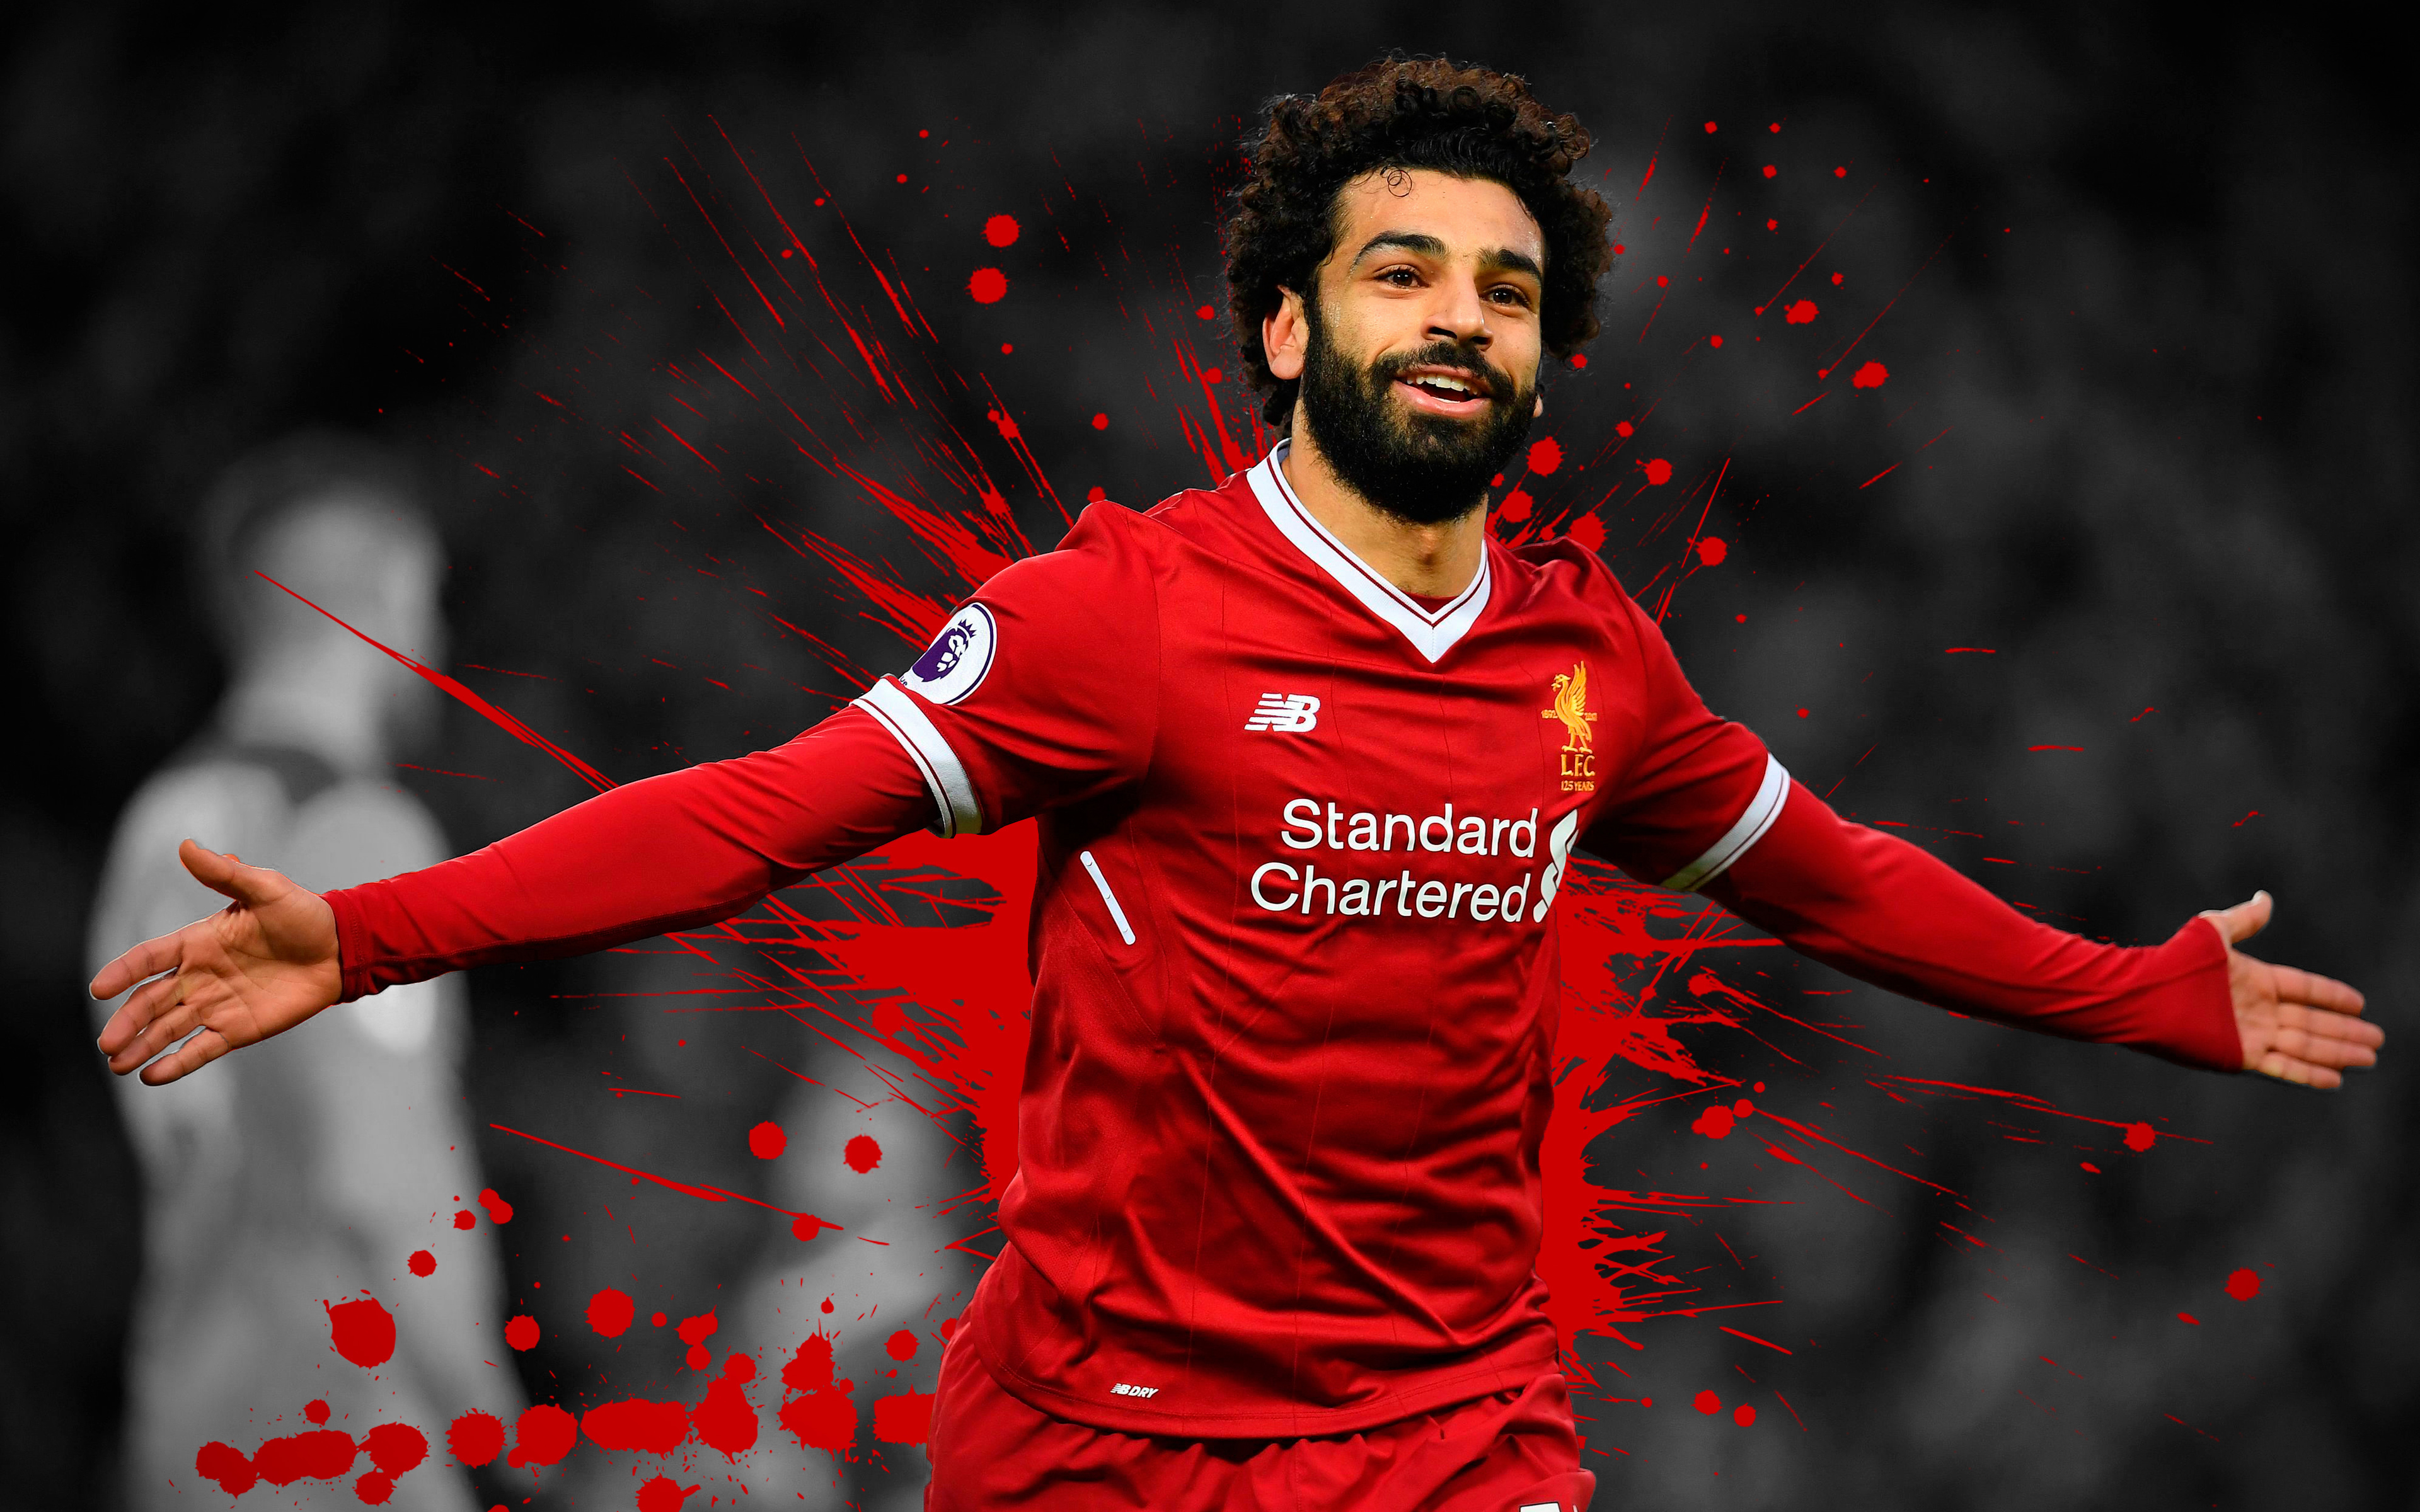 Mohamed Salah Liverpool Wallpapers